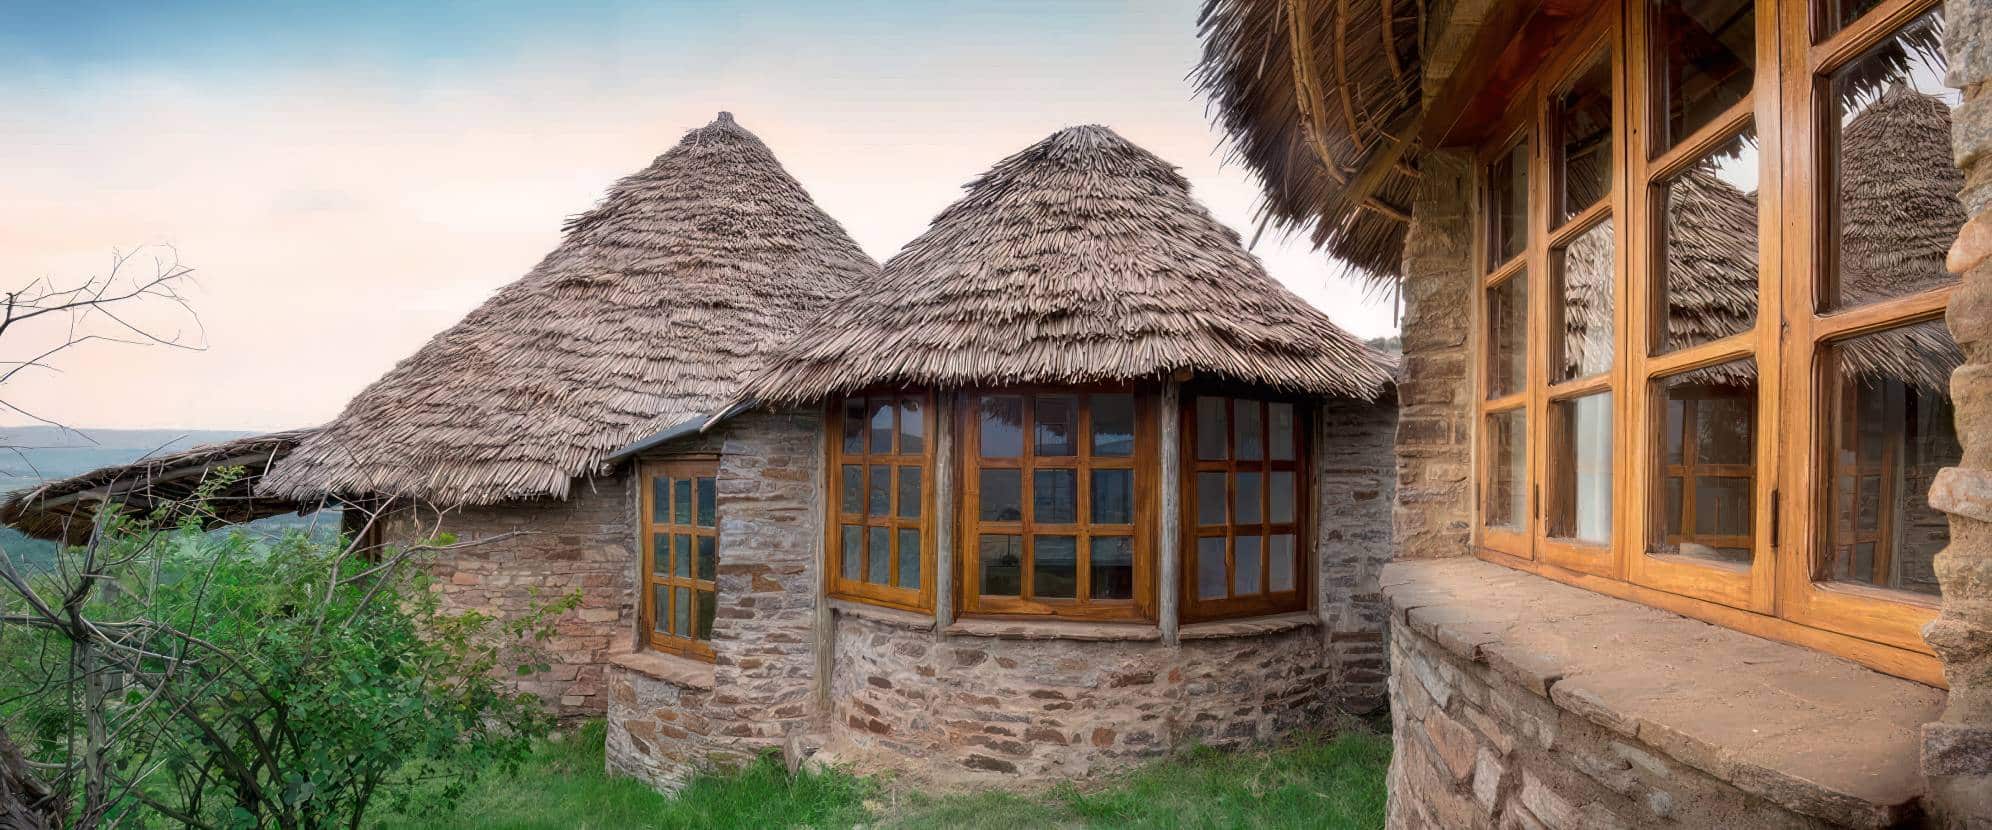 Andbeyond klein's camp – accommodation in serengeti – easy travel tanzania